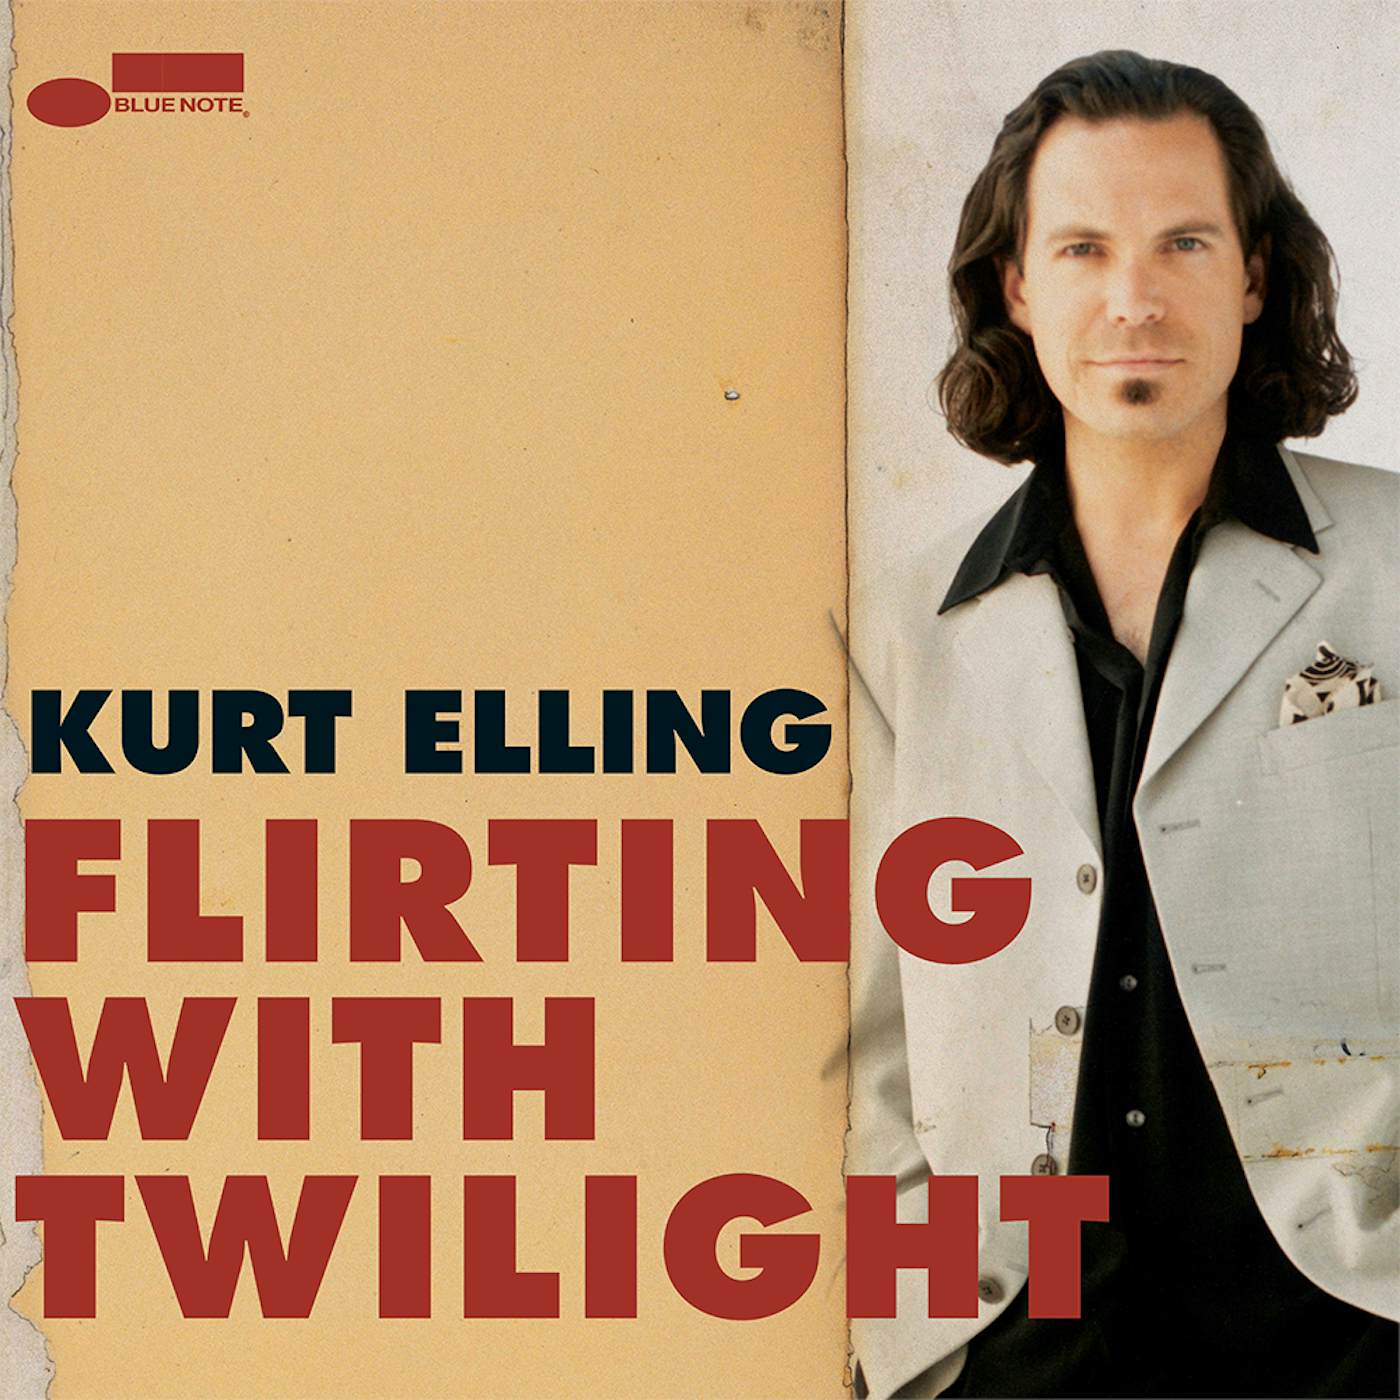 Kurt Elling - Flirting With Twilight LP (Blue Note 75th Anniversary Reissue Series) (Vinyl)